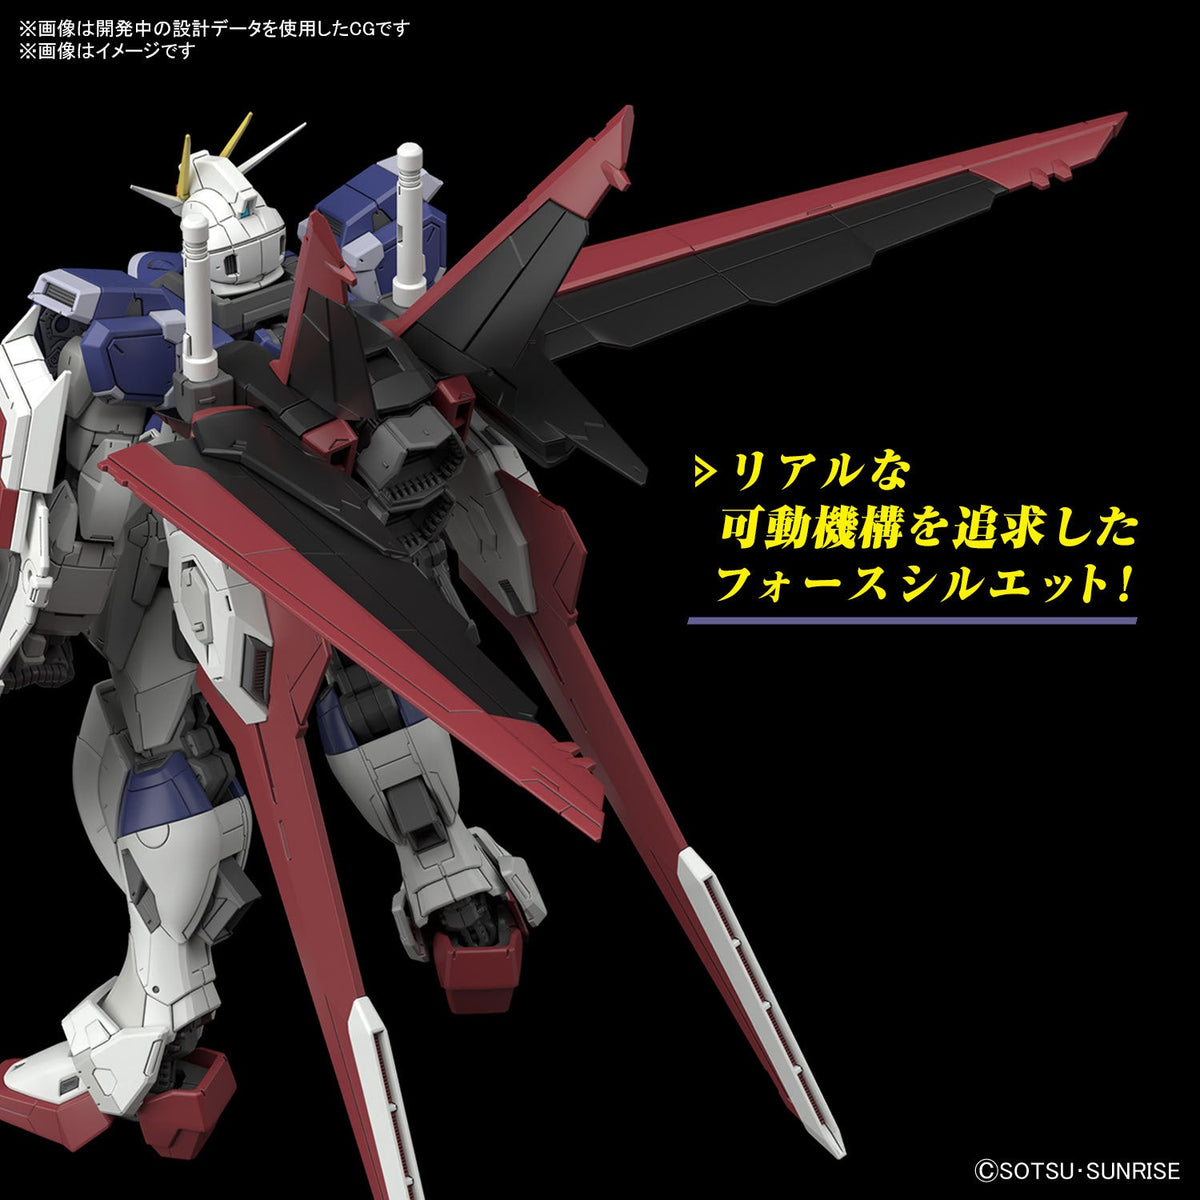 Gunpla 1/144 RG Force Impulse Gundam Spec II-Bandai-Ace Cards &amp; Collectibles